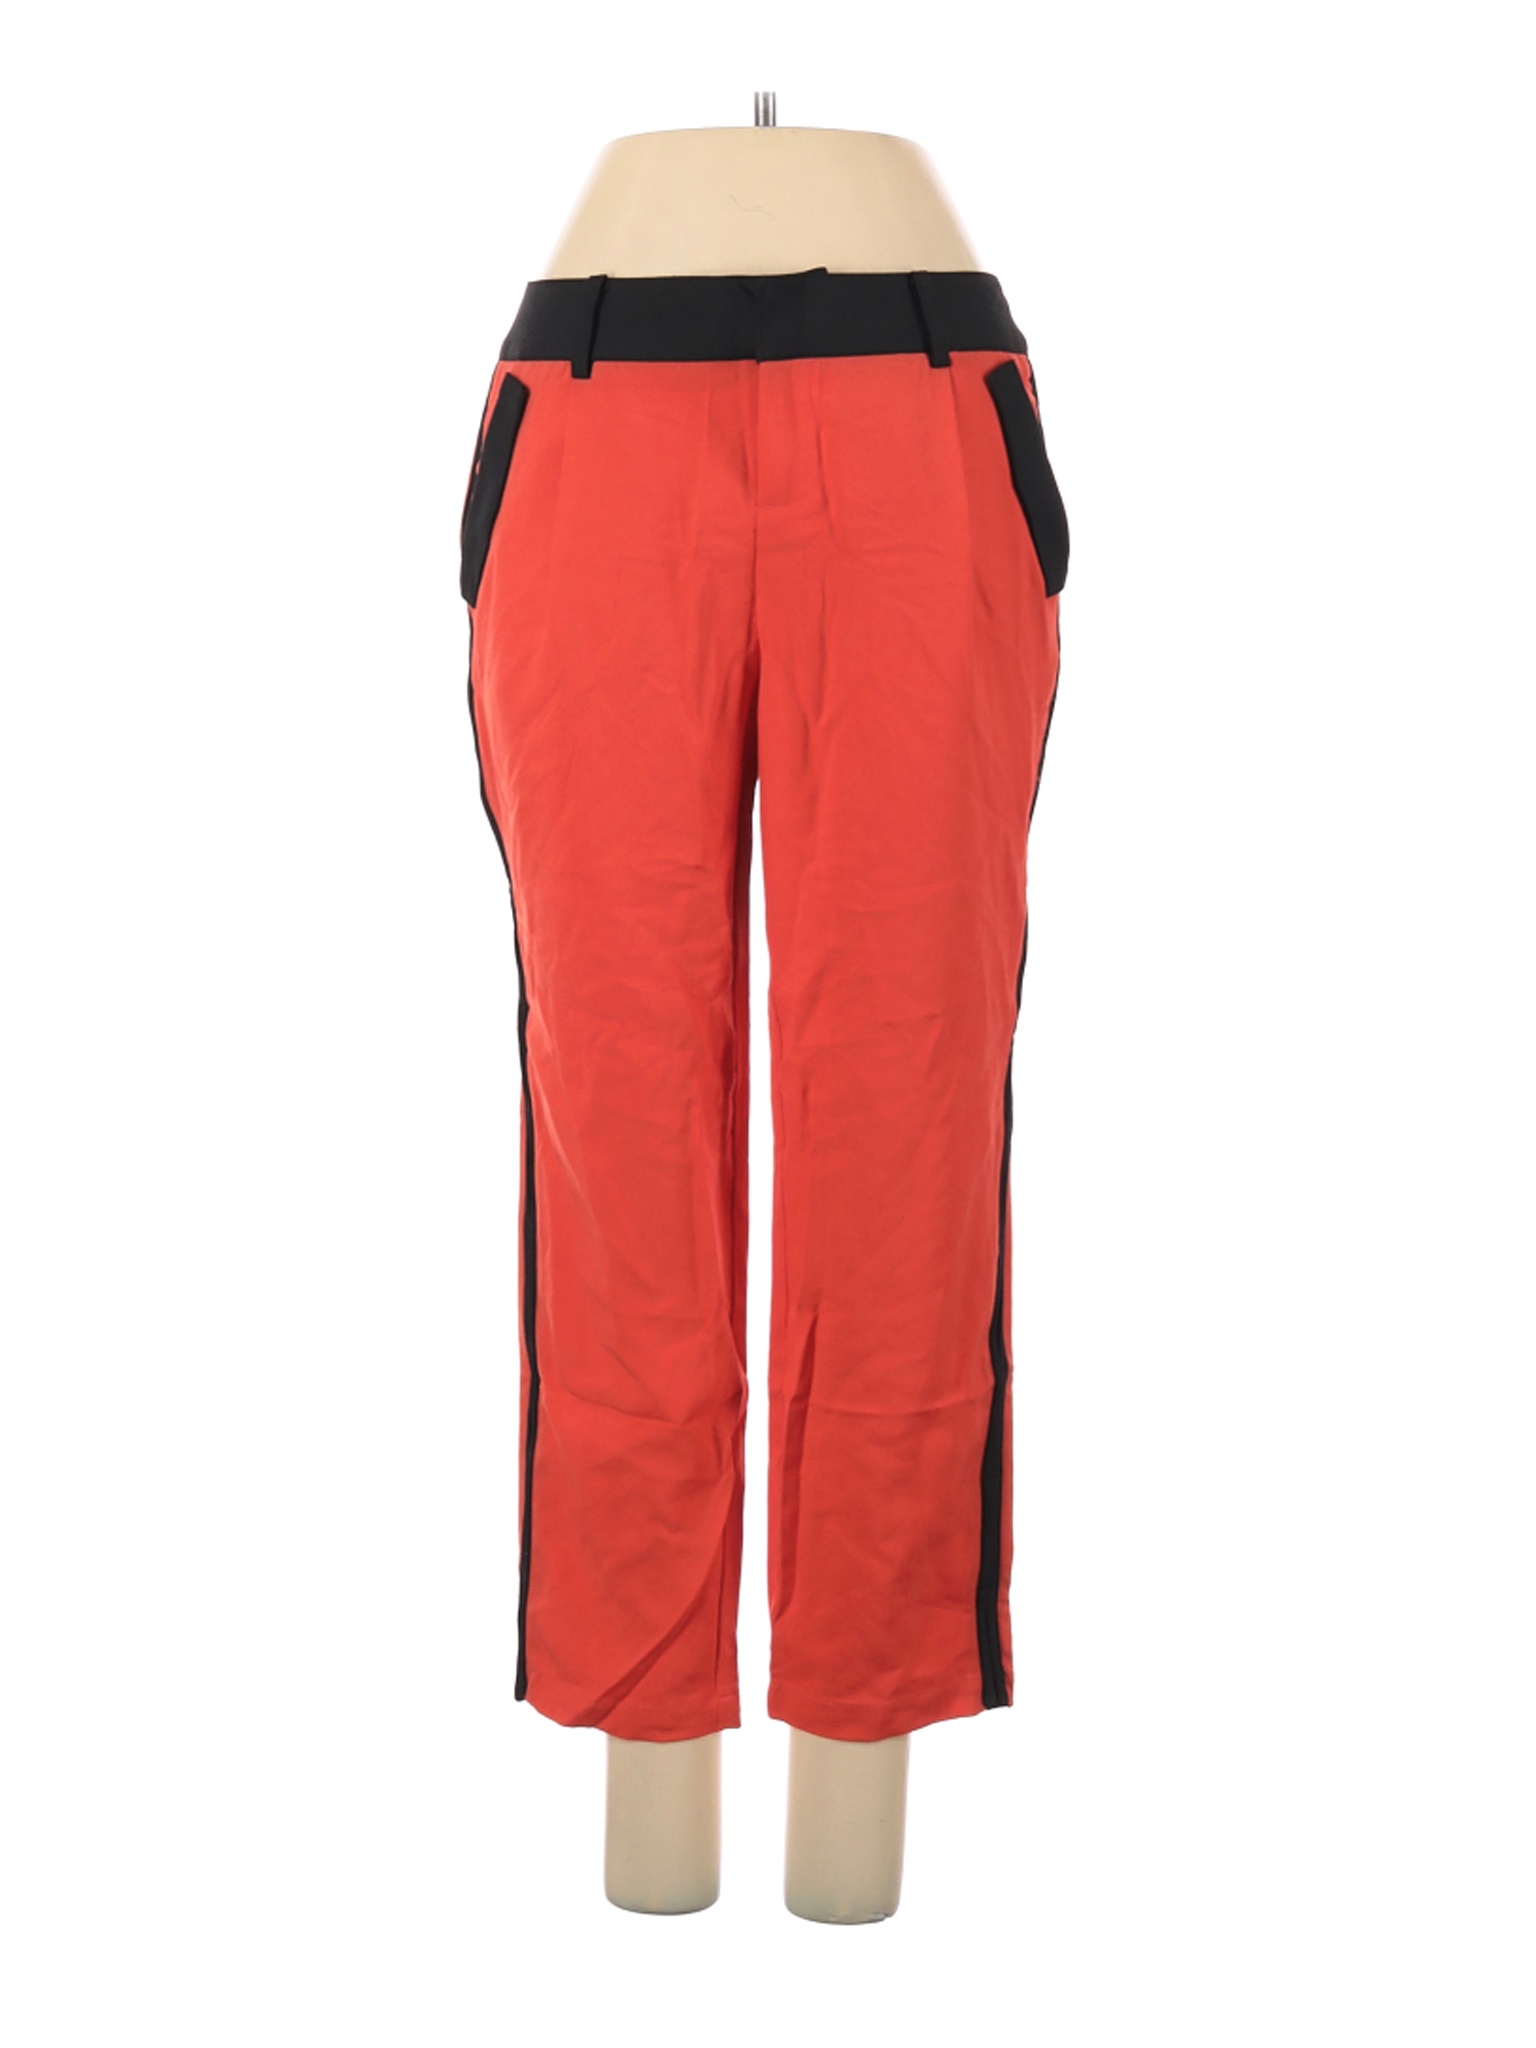 NWT Vero Moda Women Orange Dress Pants S | eBay